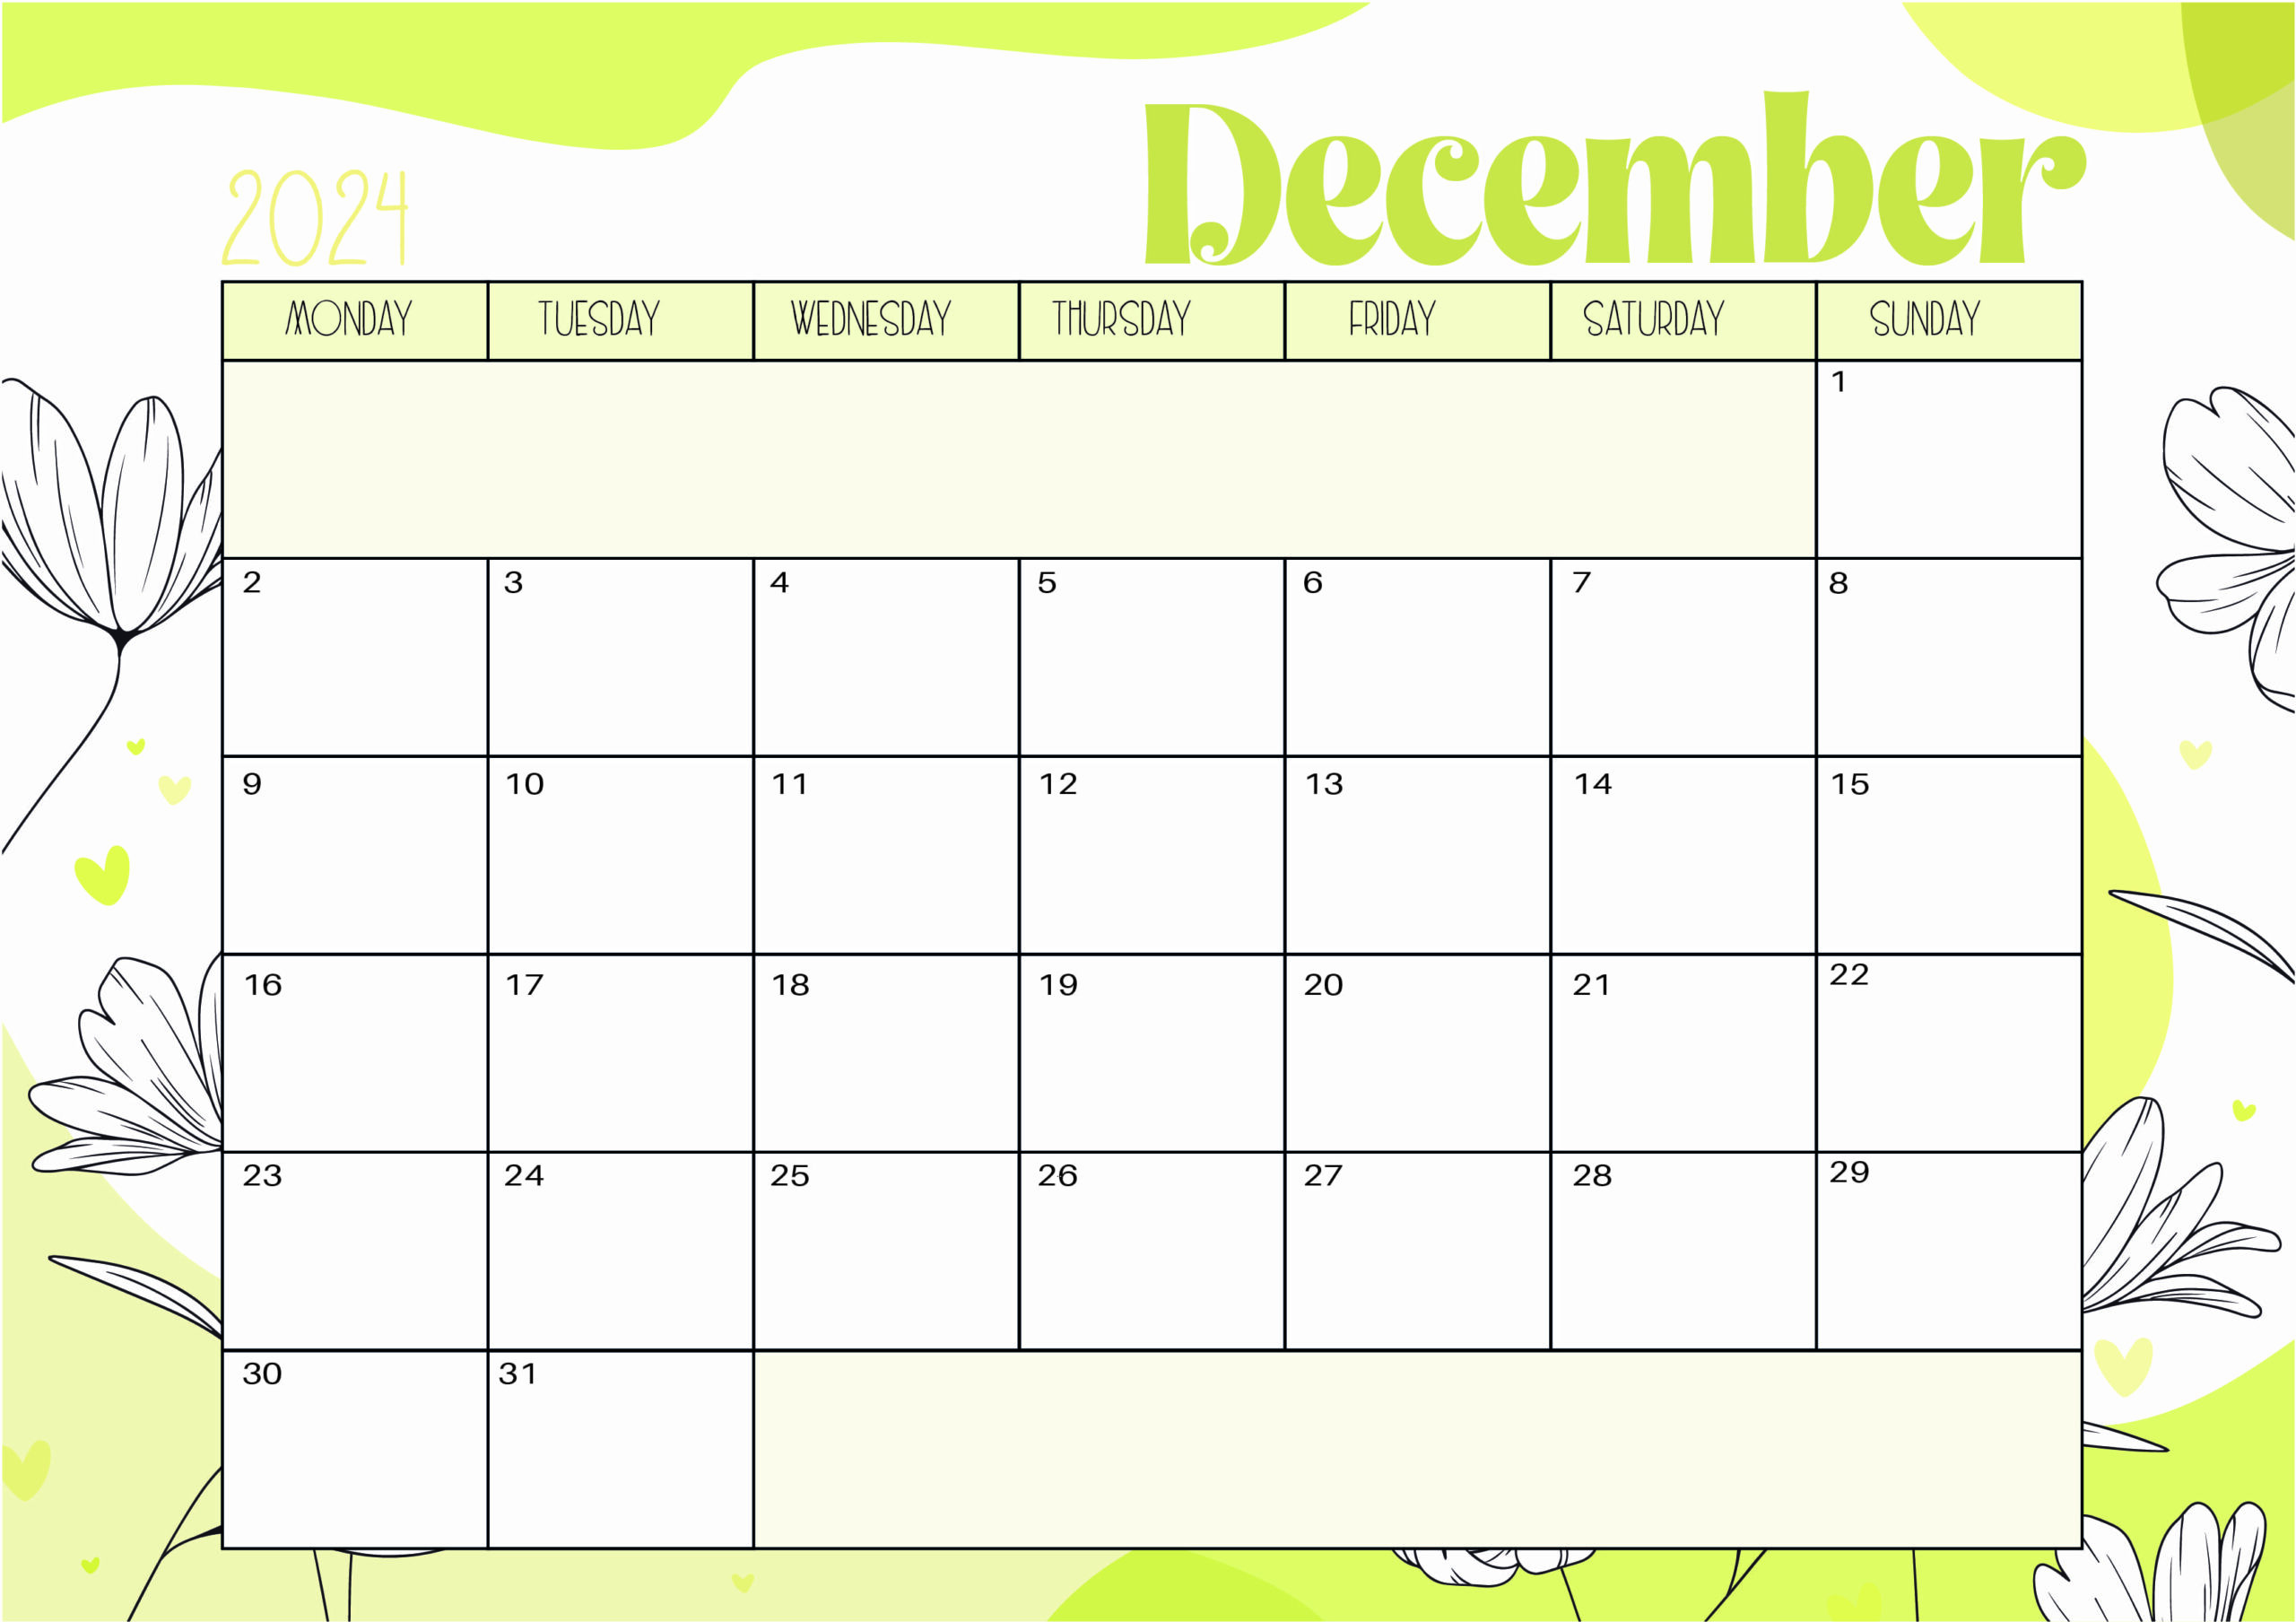 December 2024 Calendar for Printing